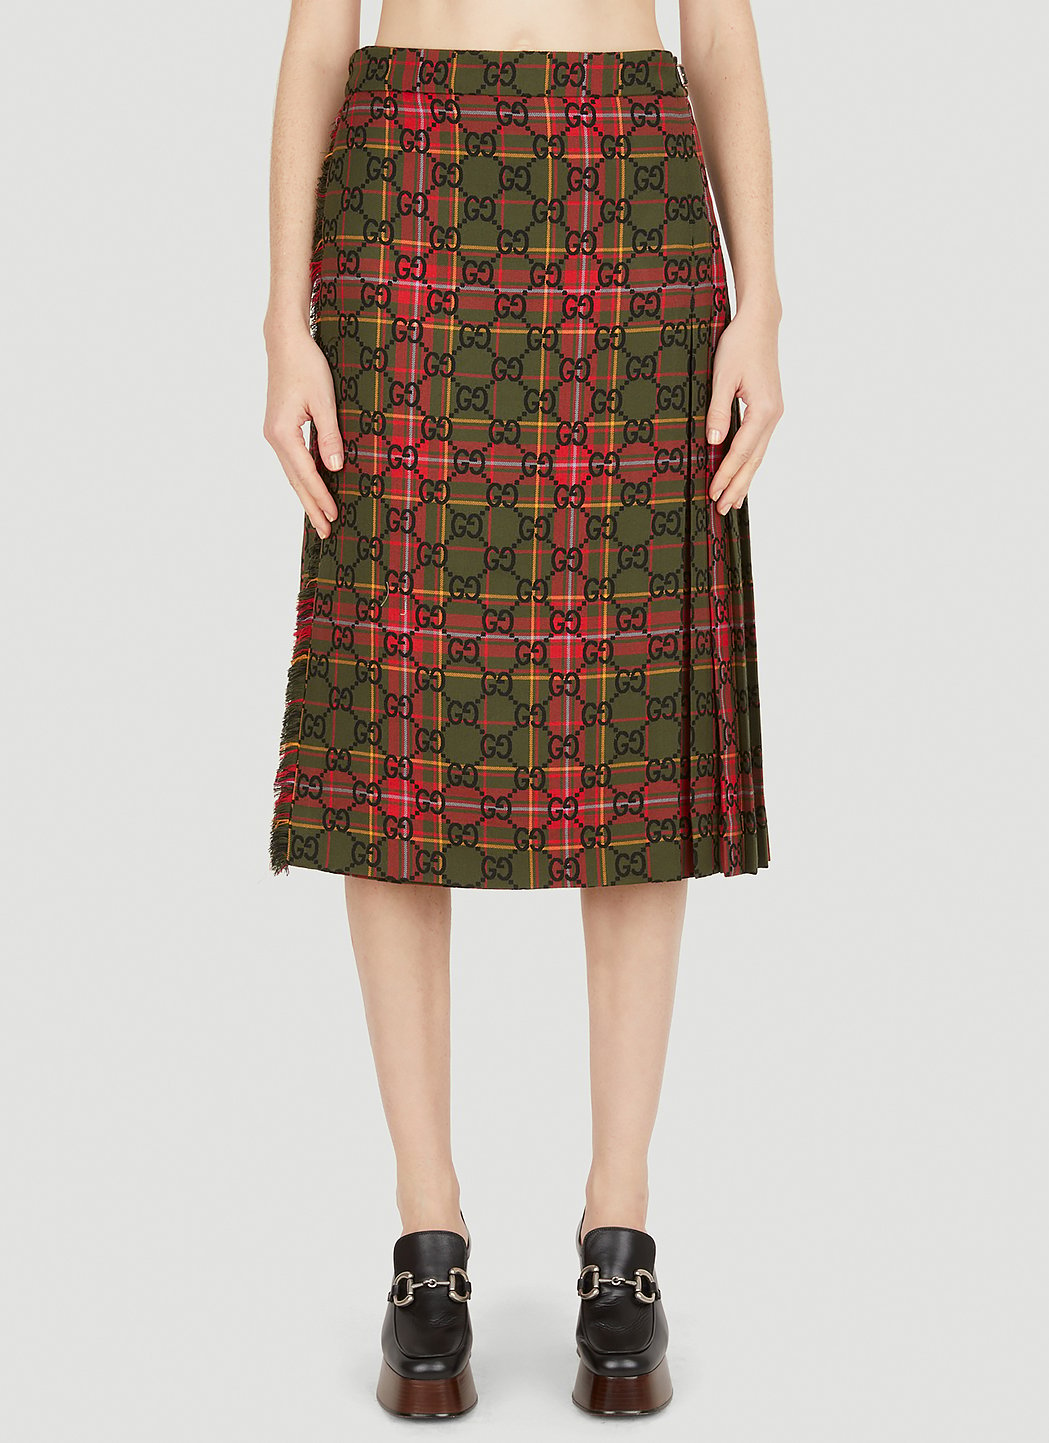 Tartan Pleated Skirt